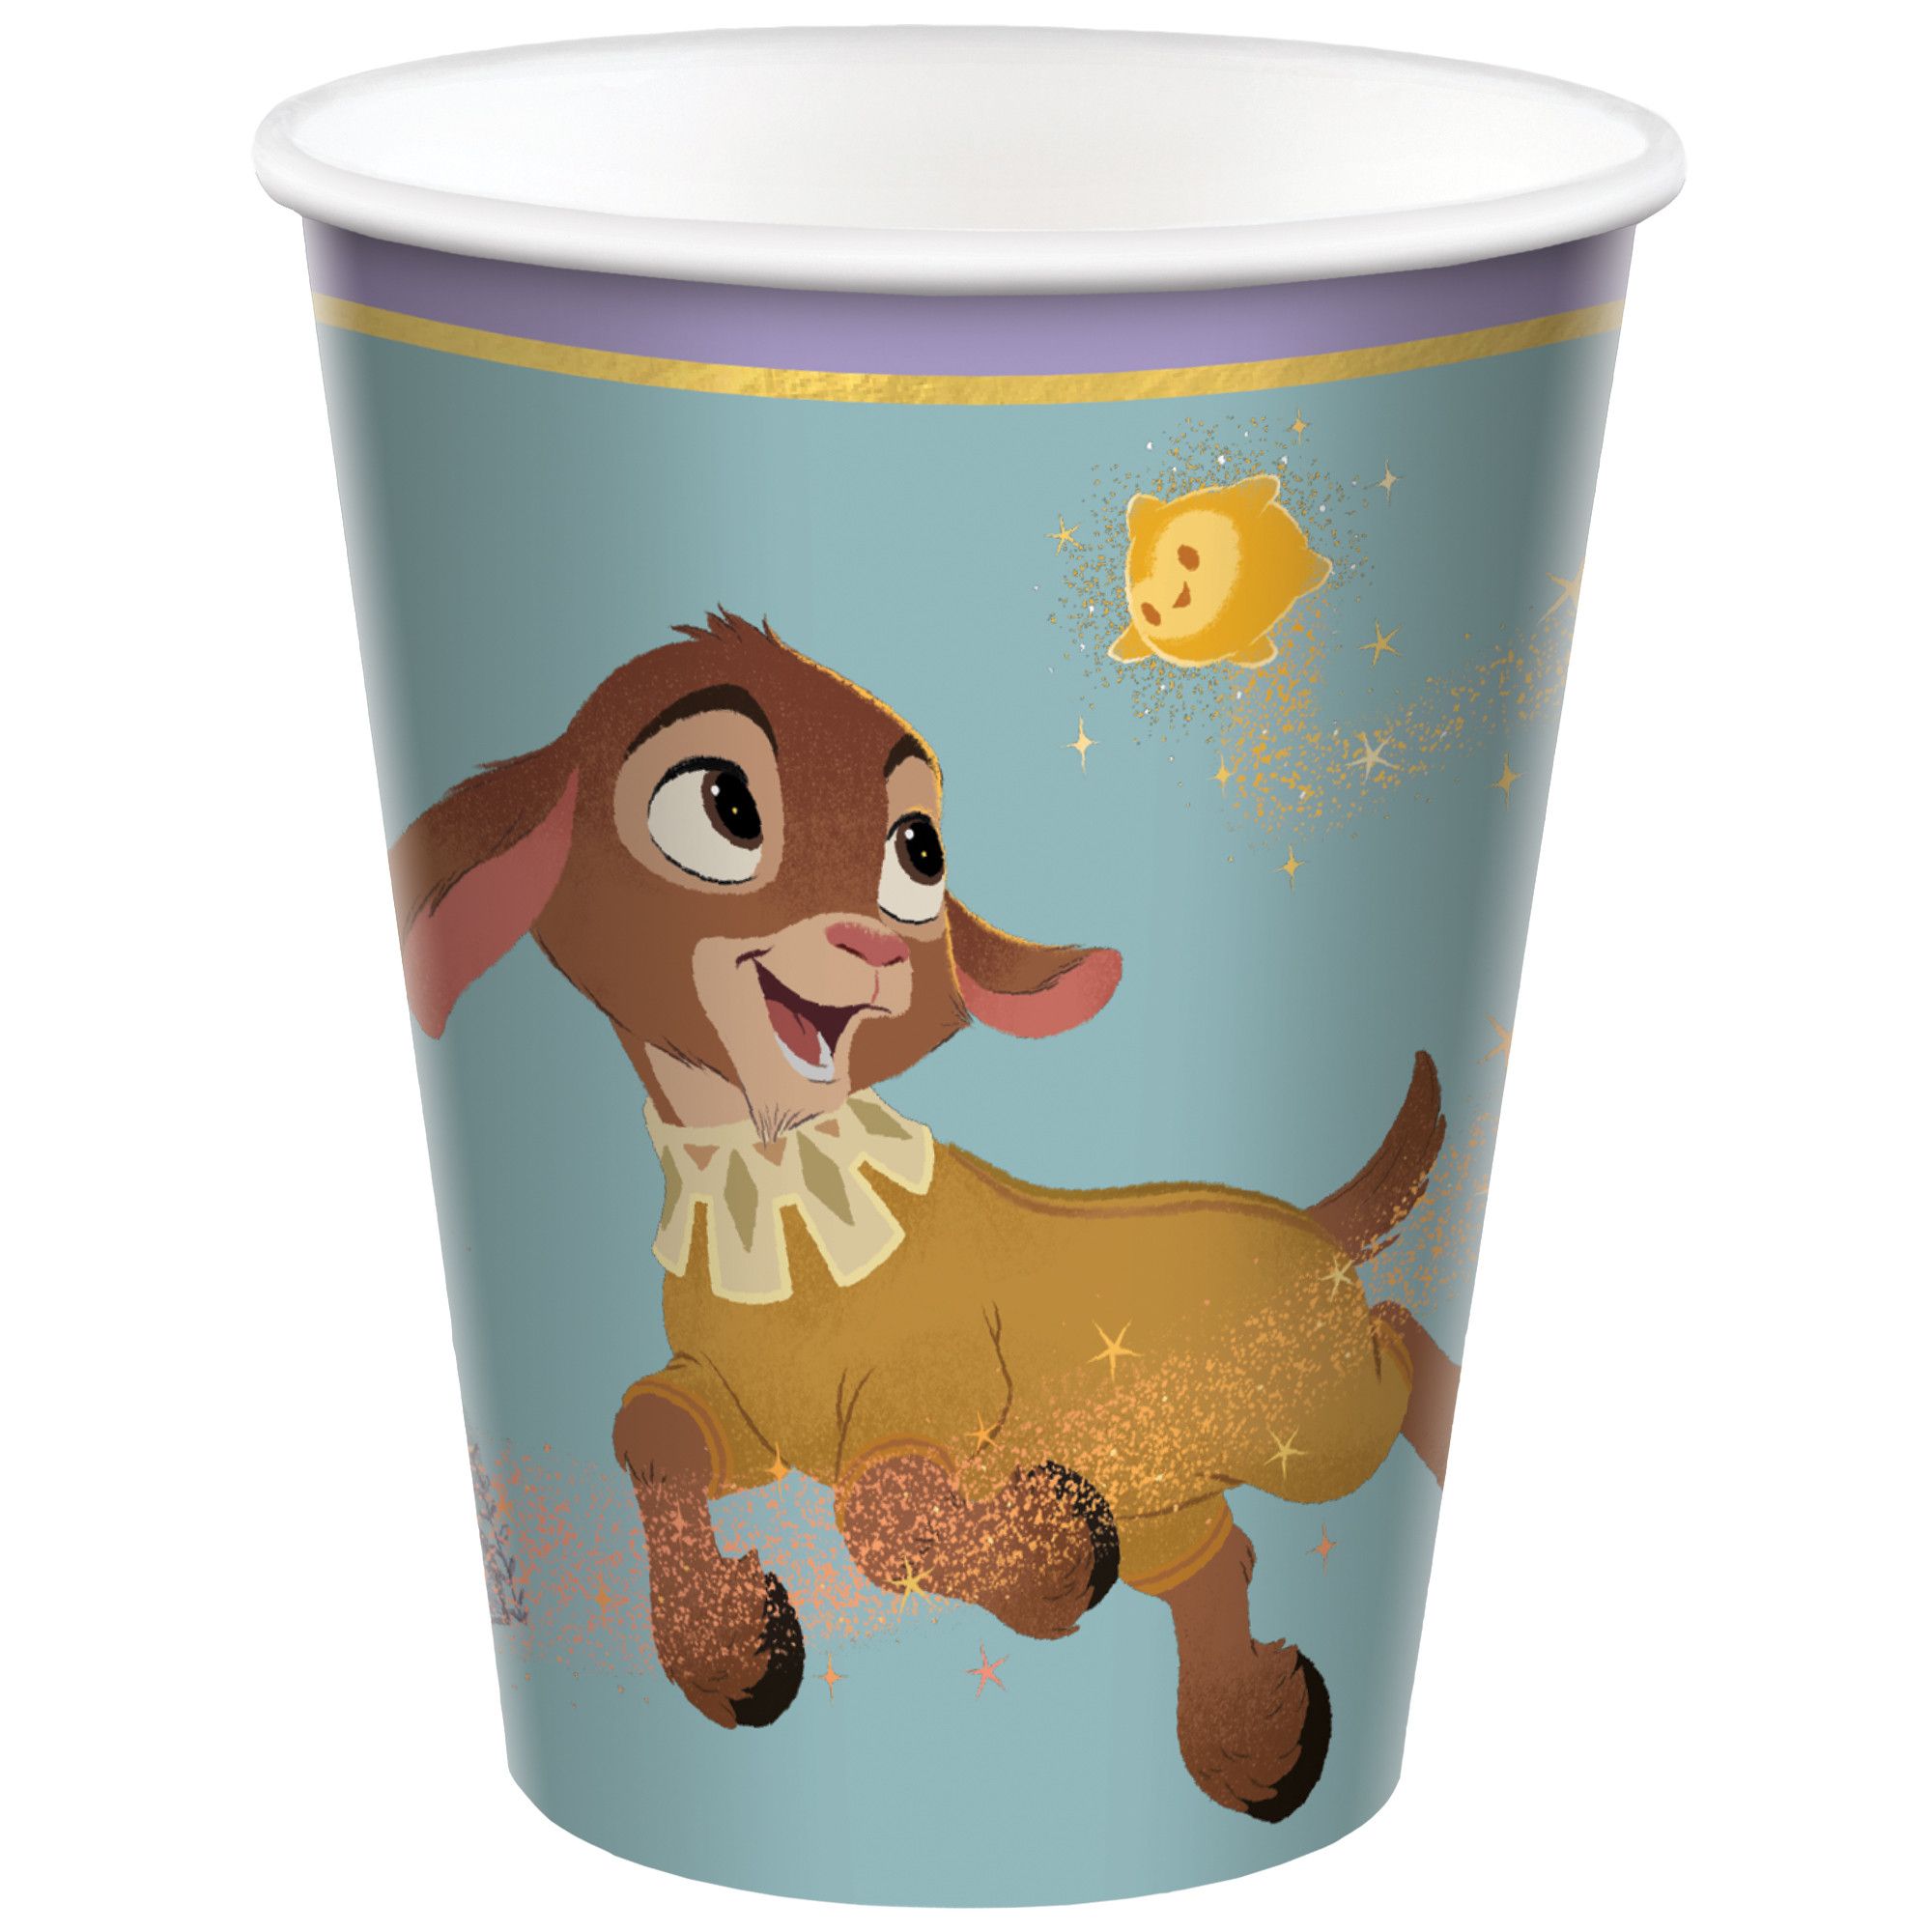 Disney Wish Valentino Paper Cups, 266-ml, 8-pk